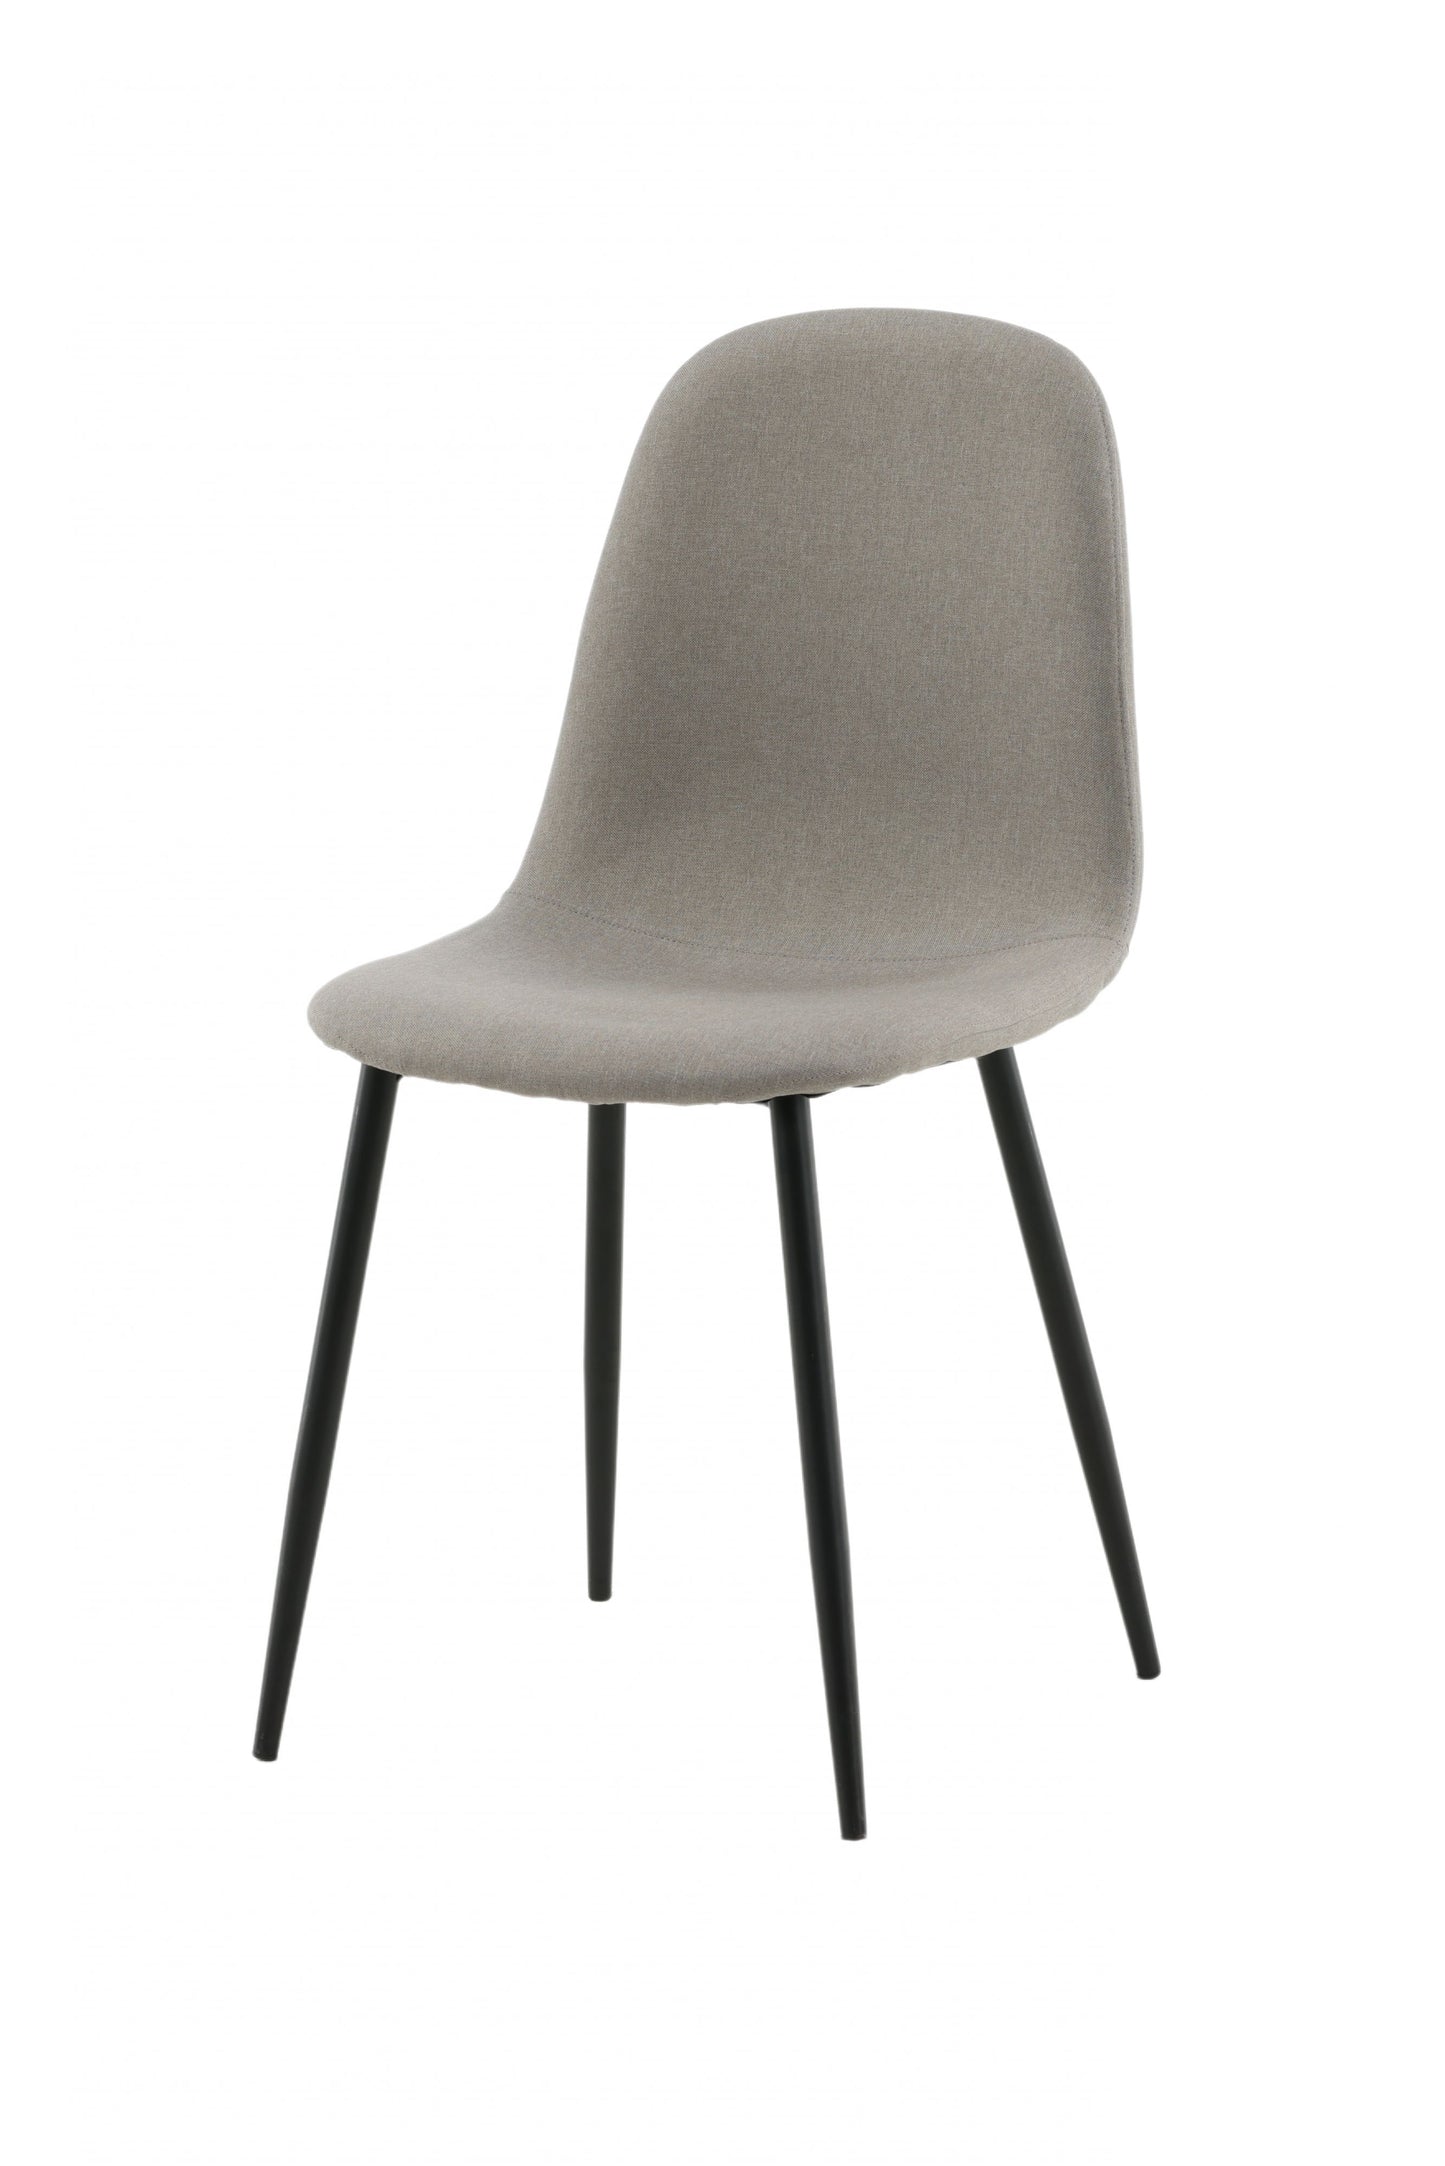 Venture Design | Polar stol - grått tyg, svarta ben